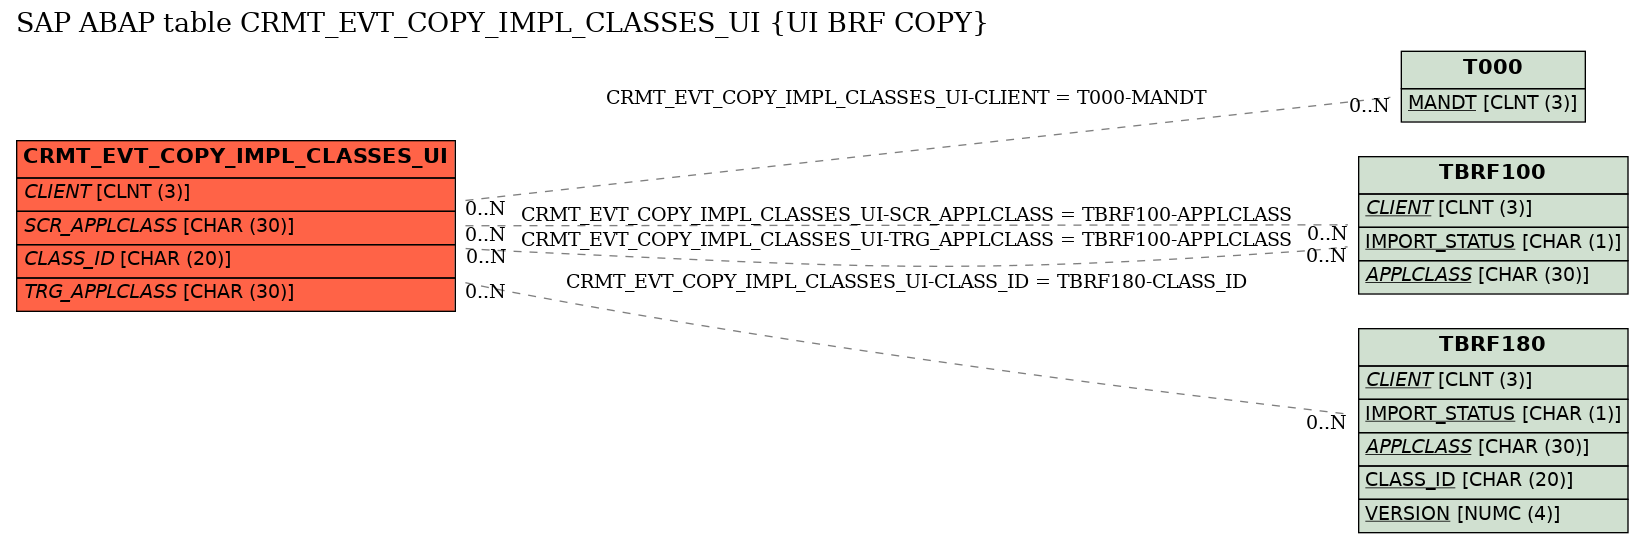 E-R Diagram for table CRMT_EVT_COPY_IMPL_CLASSES_UI (UI BRF COPY)